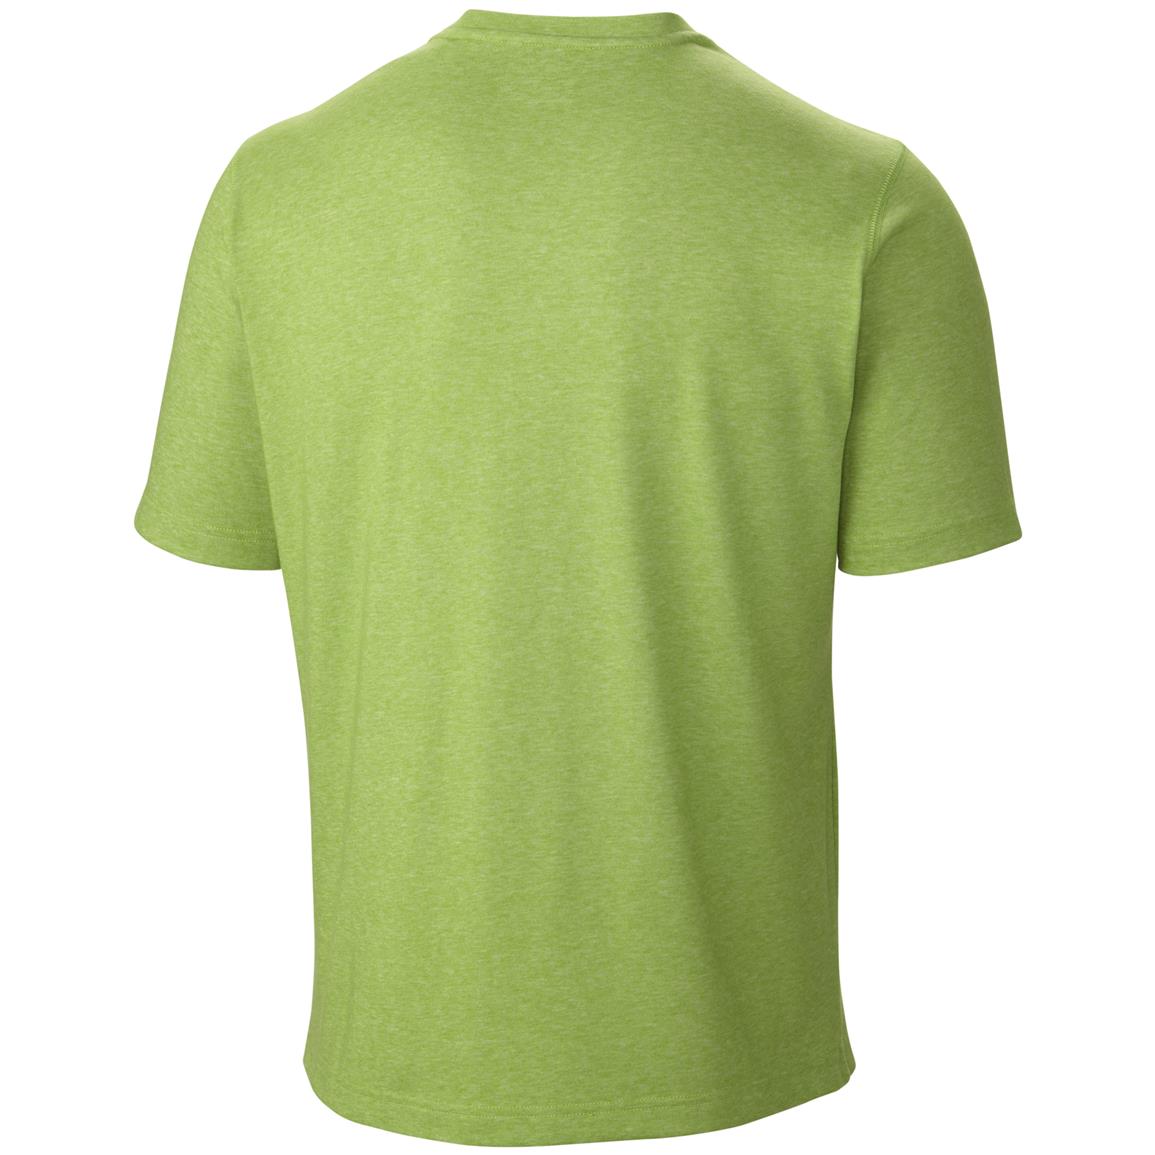 Download Columbia Men's Thistletown Park Pocket T-shirt - 619111, T ...